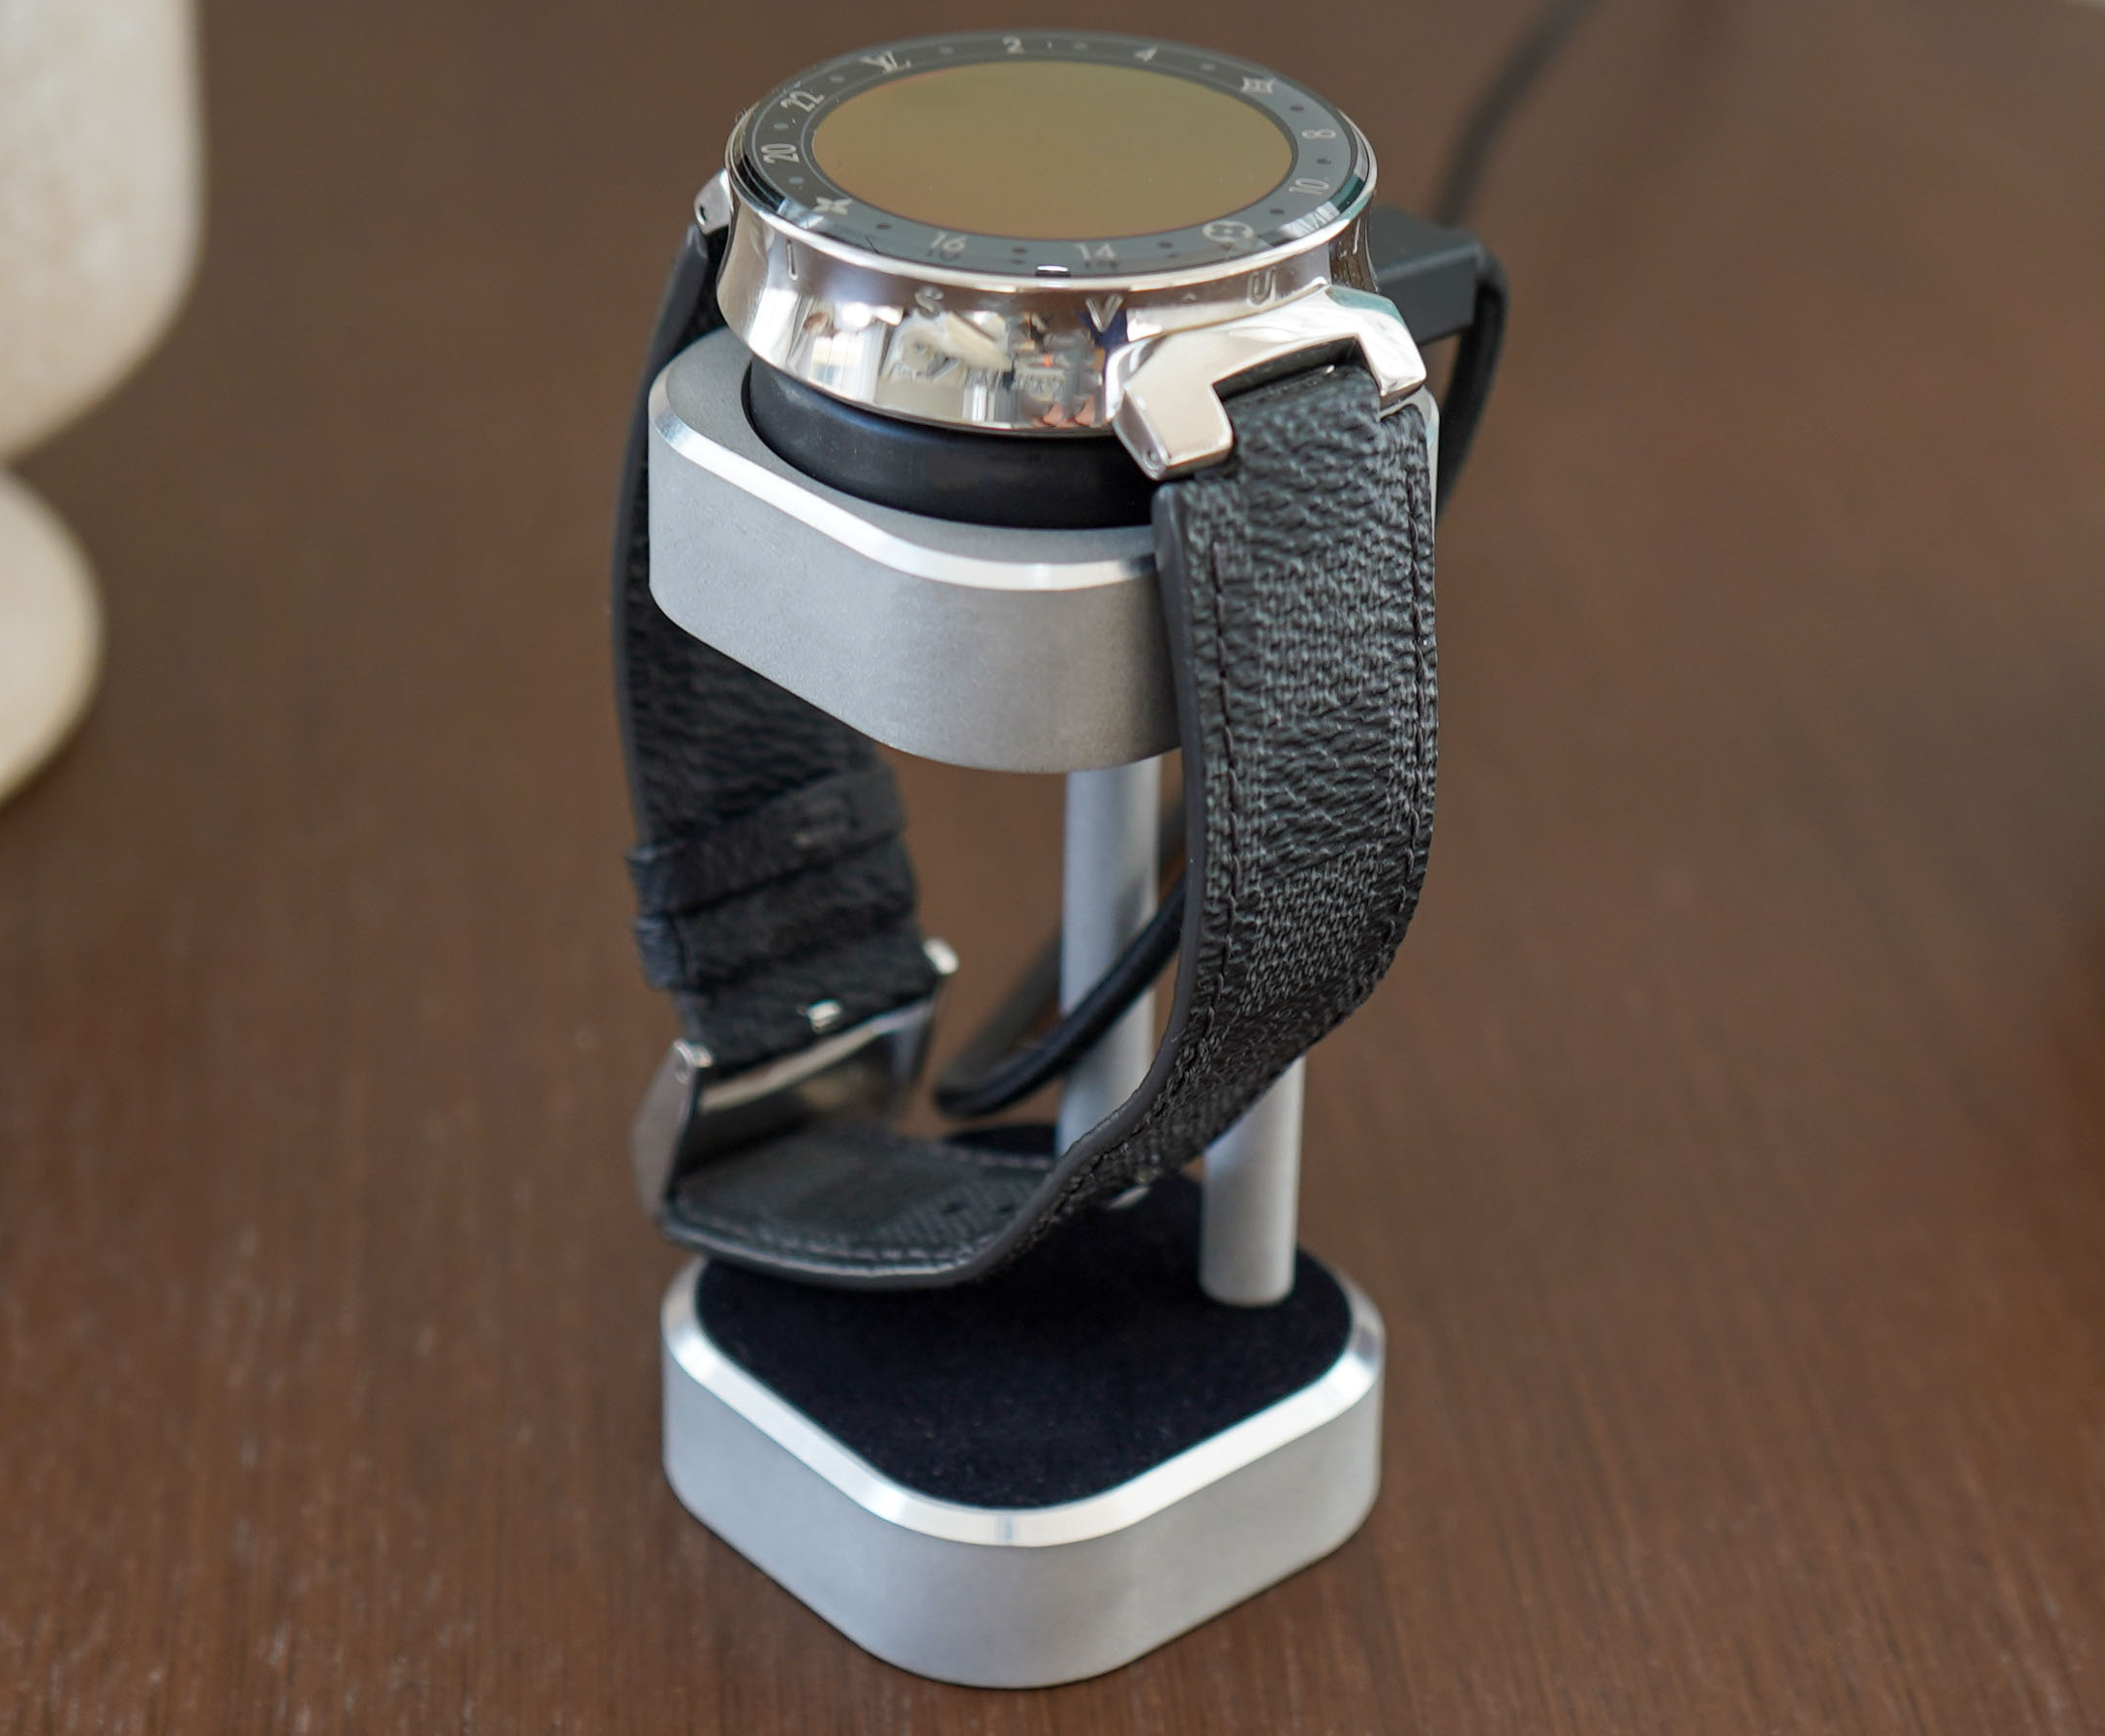 Louis Vuitton Tambour Horizon Smartwatch Charging Stand Band Combo